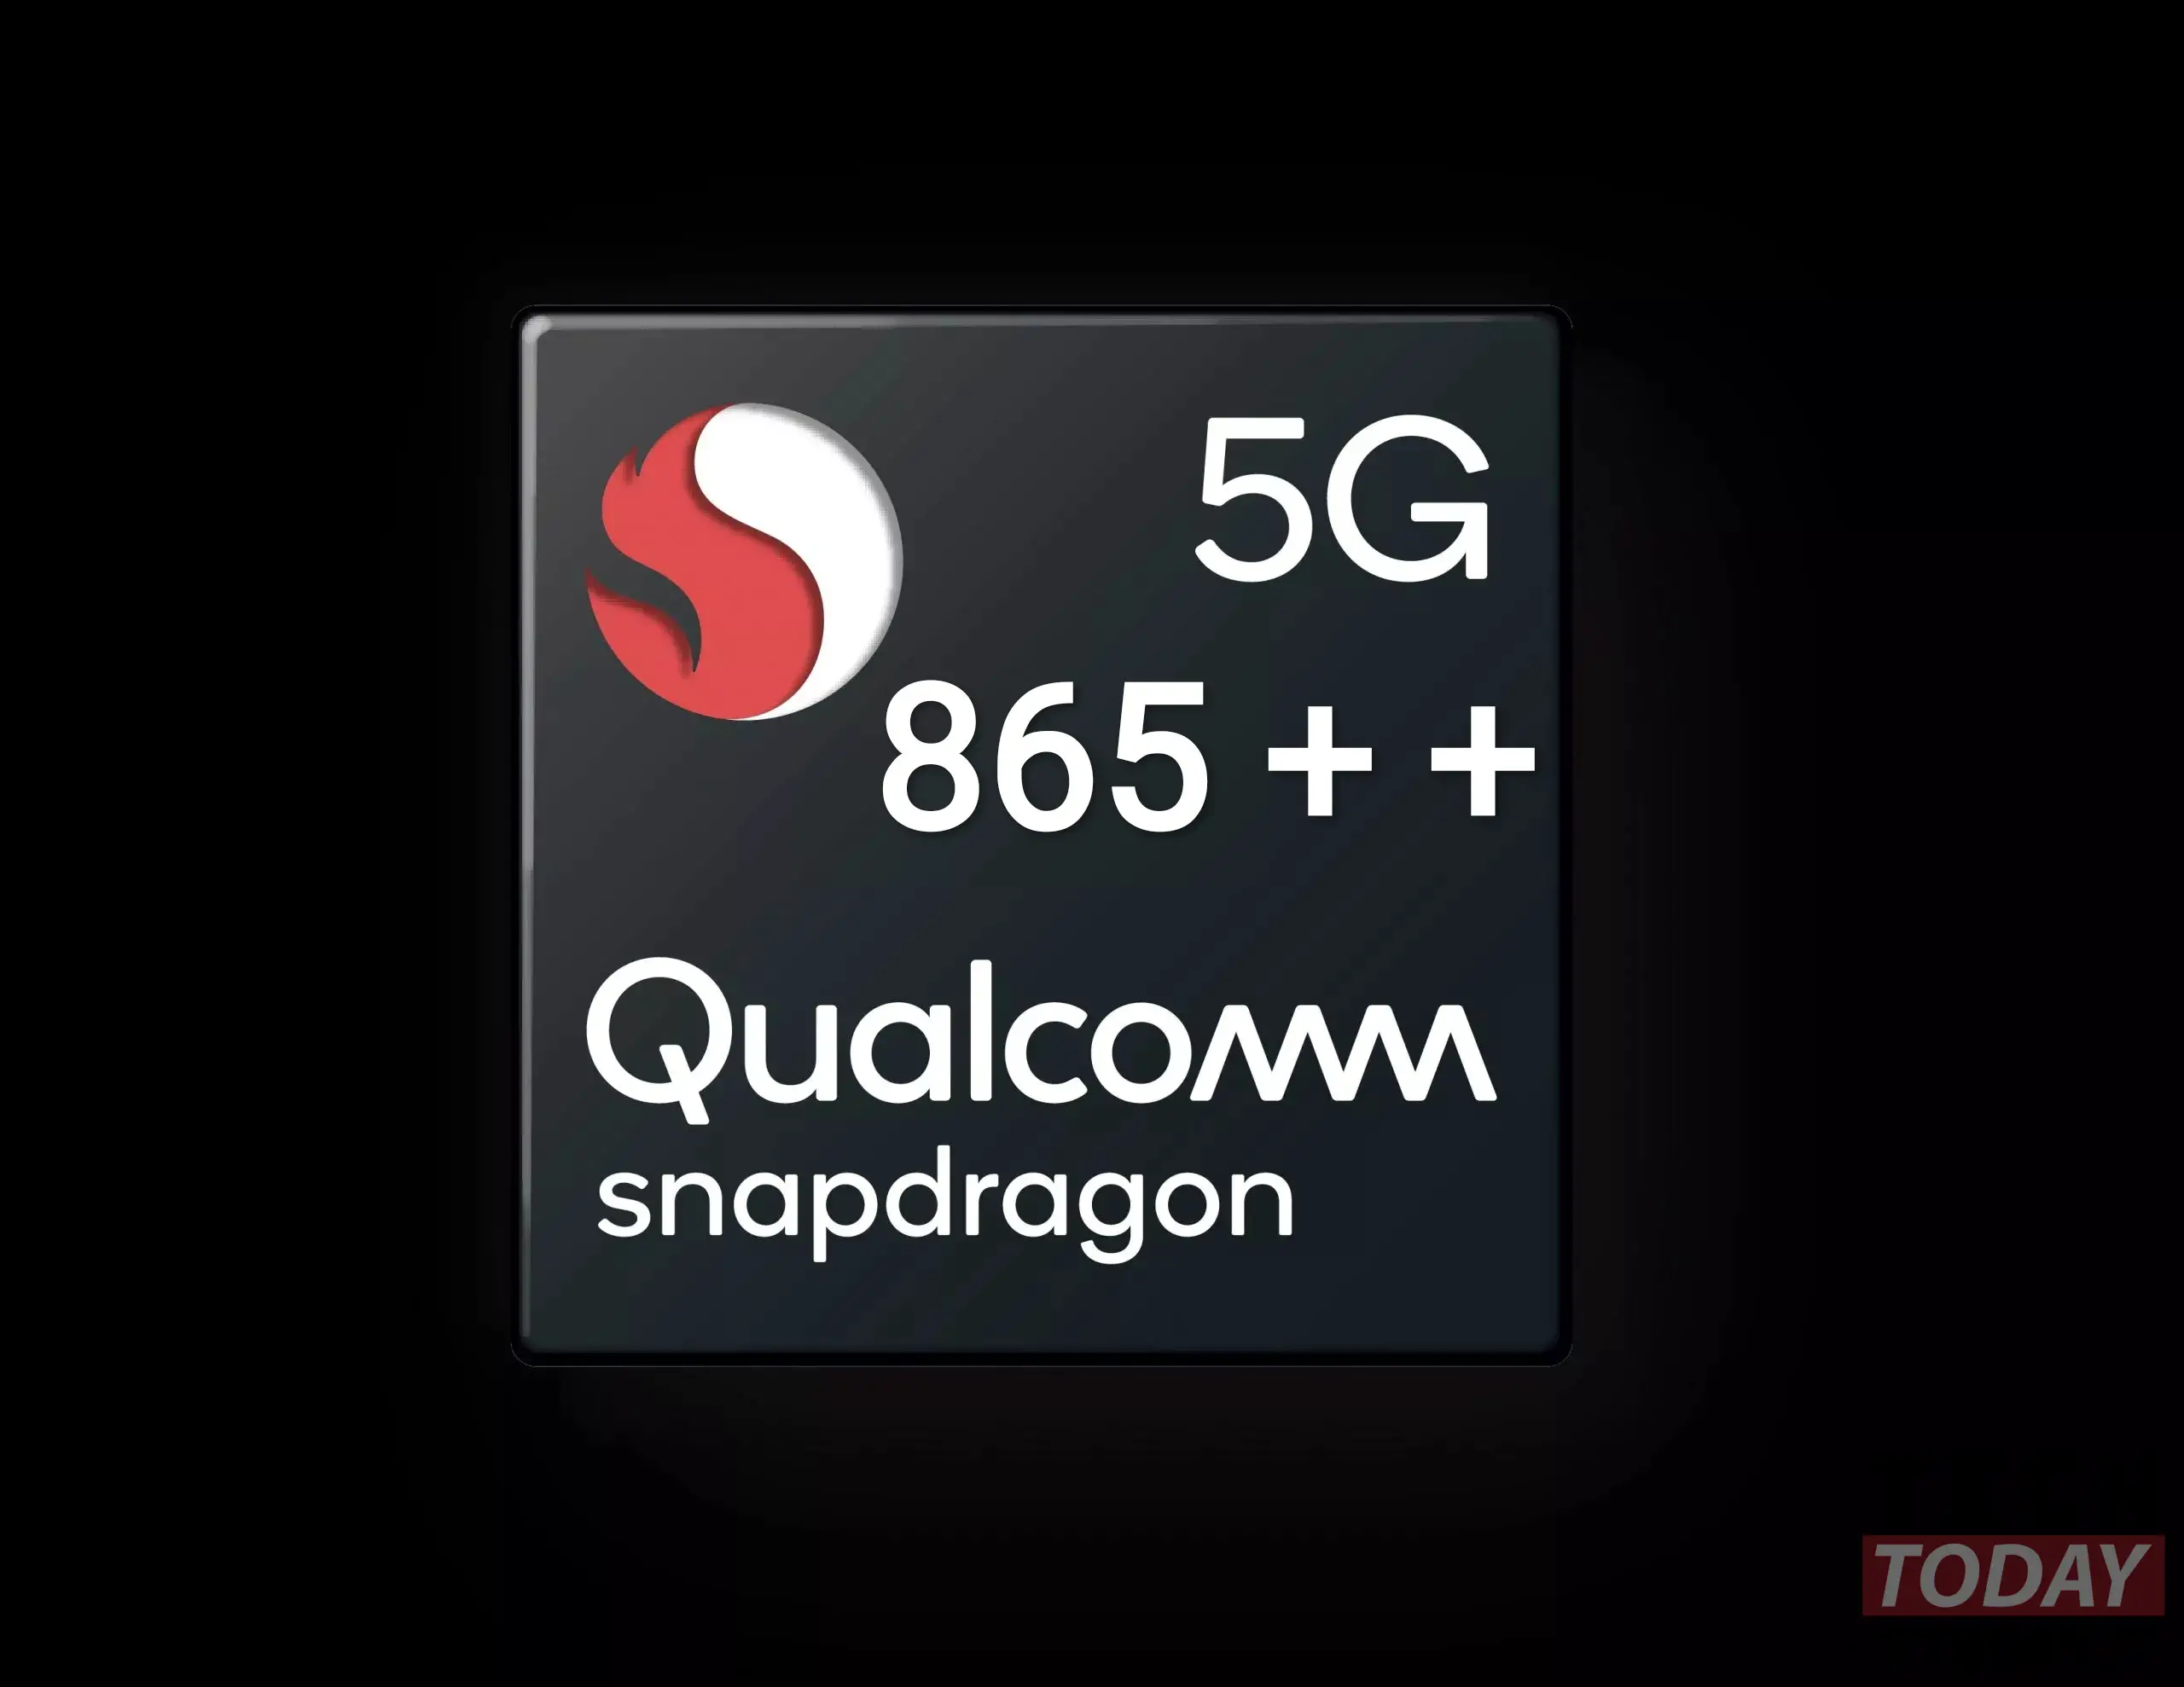 Oppo: smartphone na may Snapdragon 865 na overclock sa 3.2 GHZ